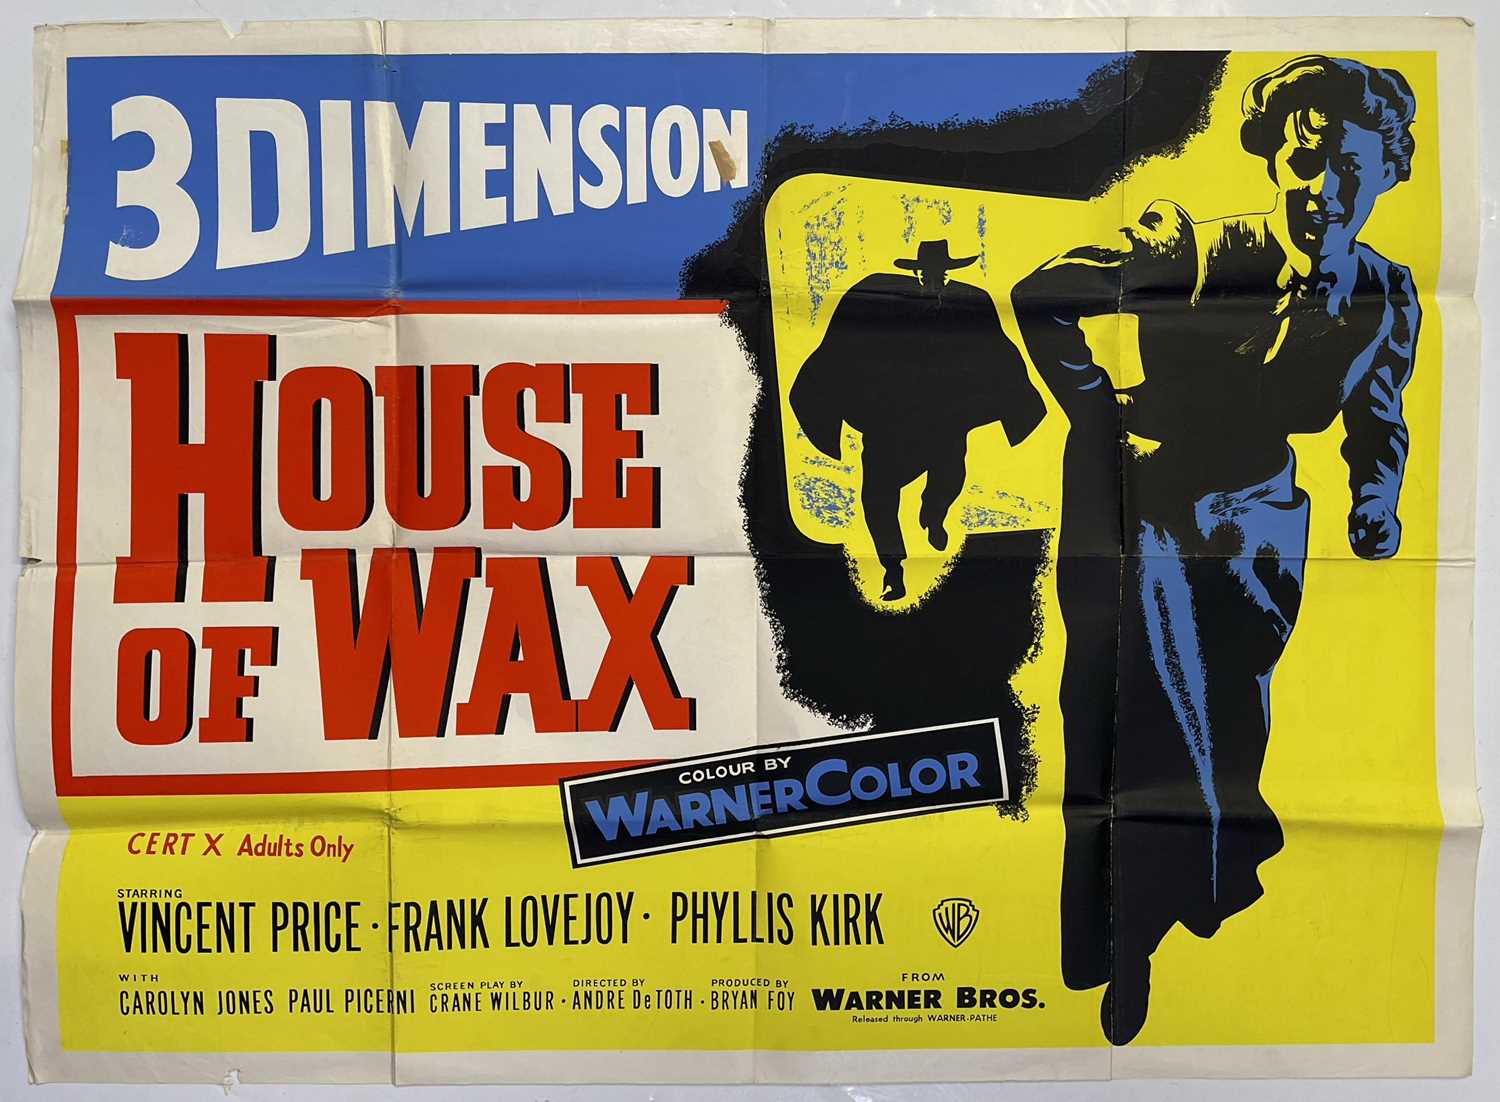 HOUSE OF WAX (1953) - ORIGINAL UK QUAD POSTER.